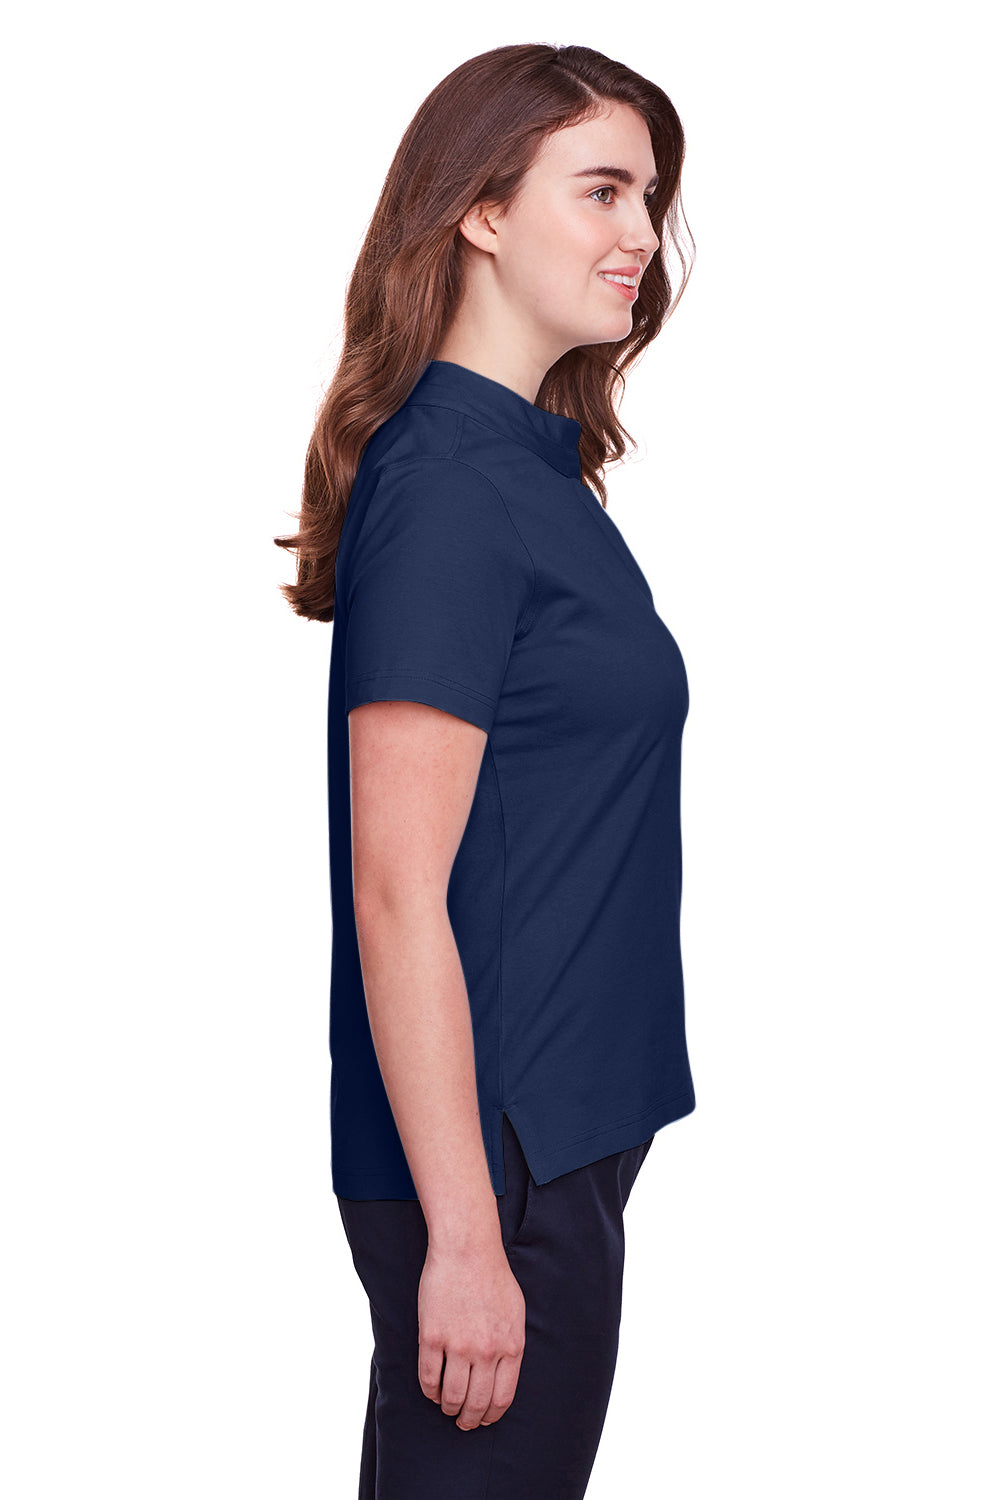 UltraClub UC105W Womens Lakeshore Performance Moisture Wicking Short Sleeve Polo Shirt Navy Blue Side